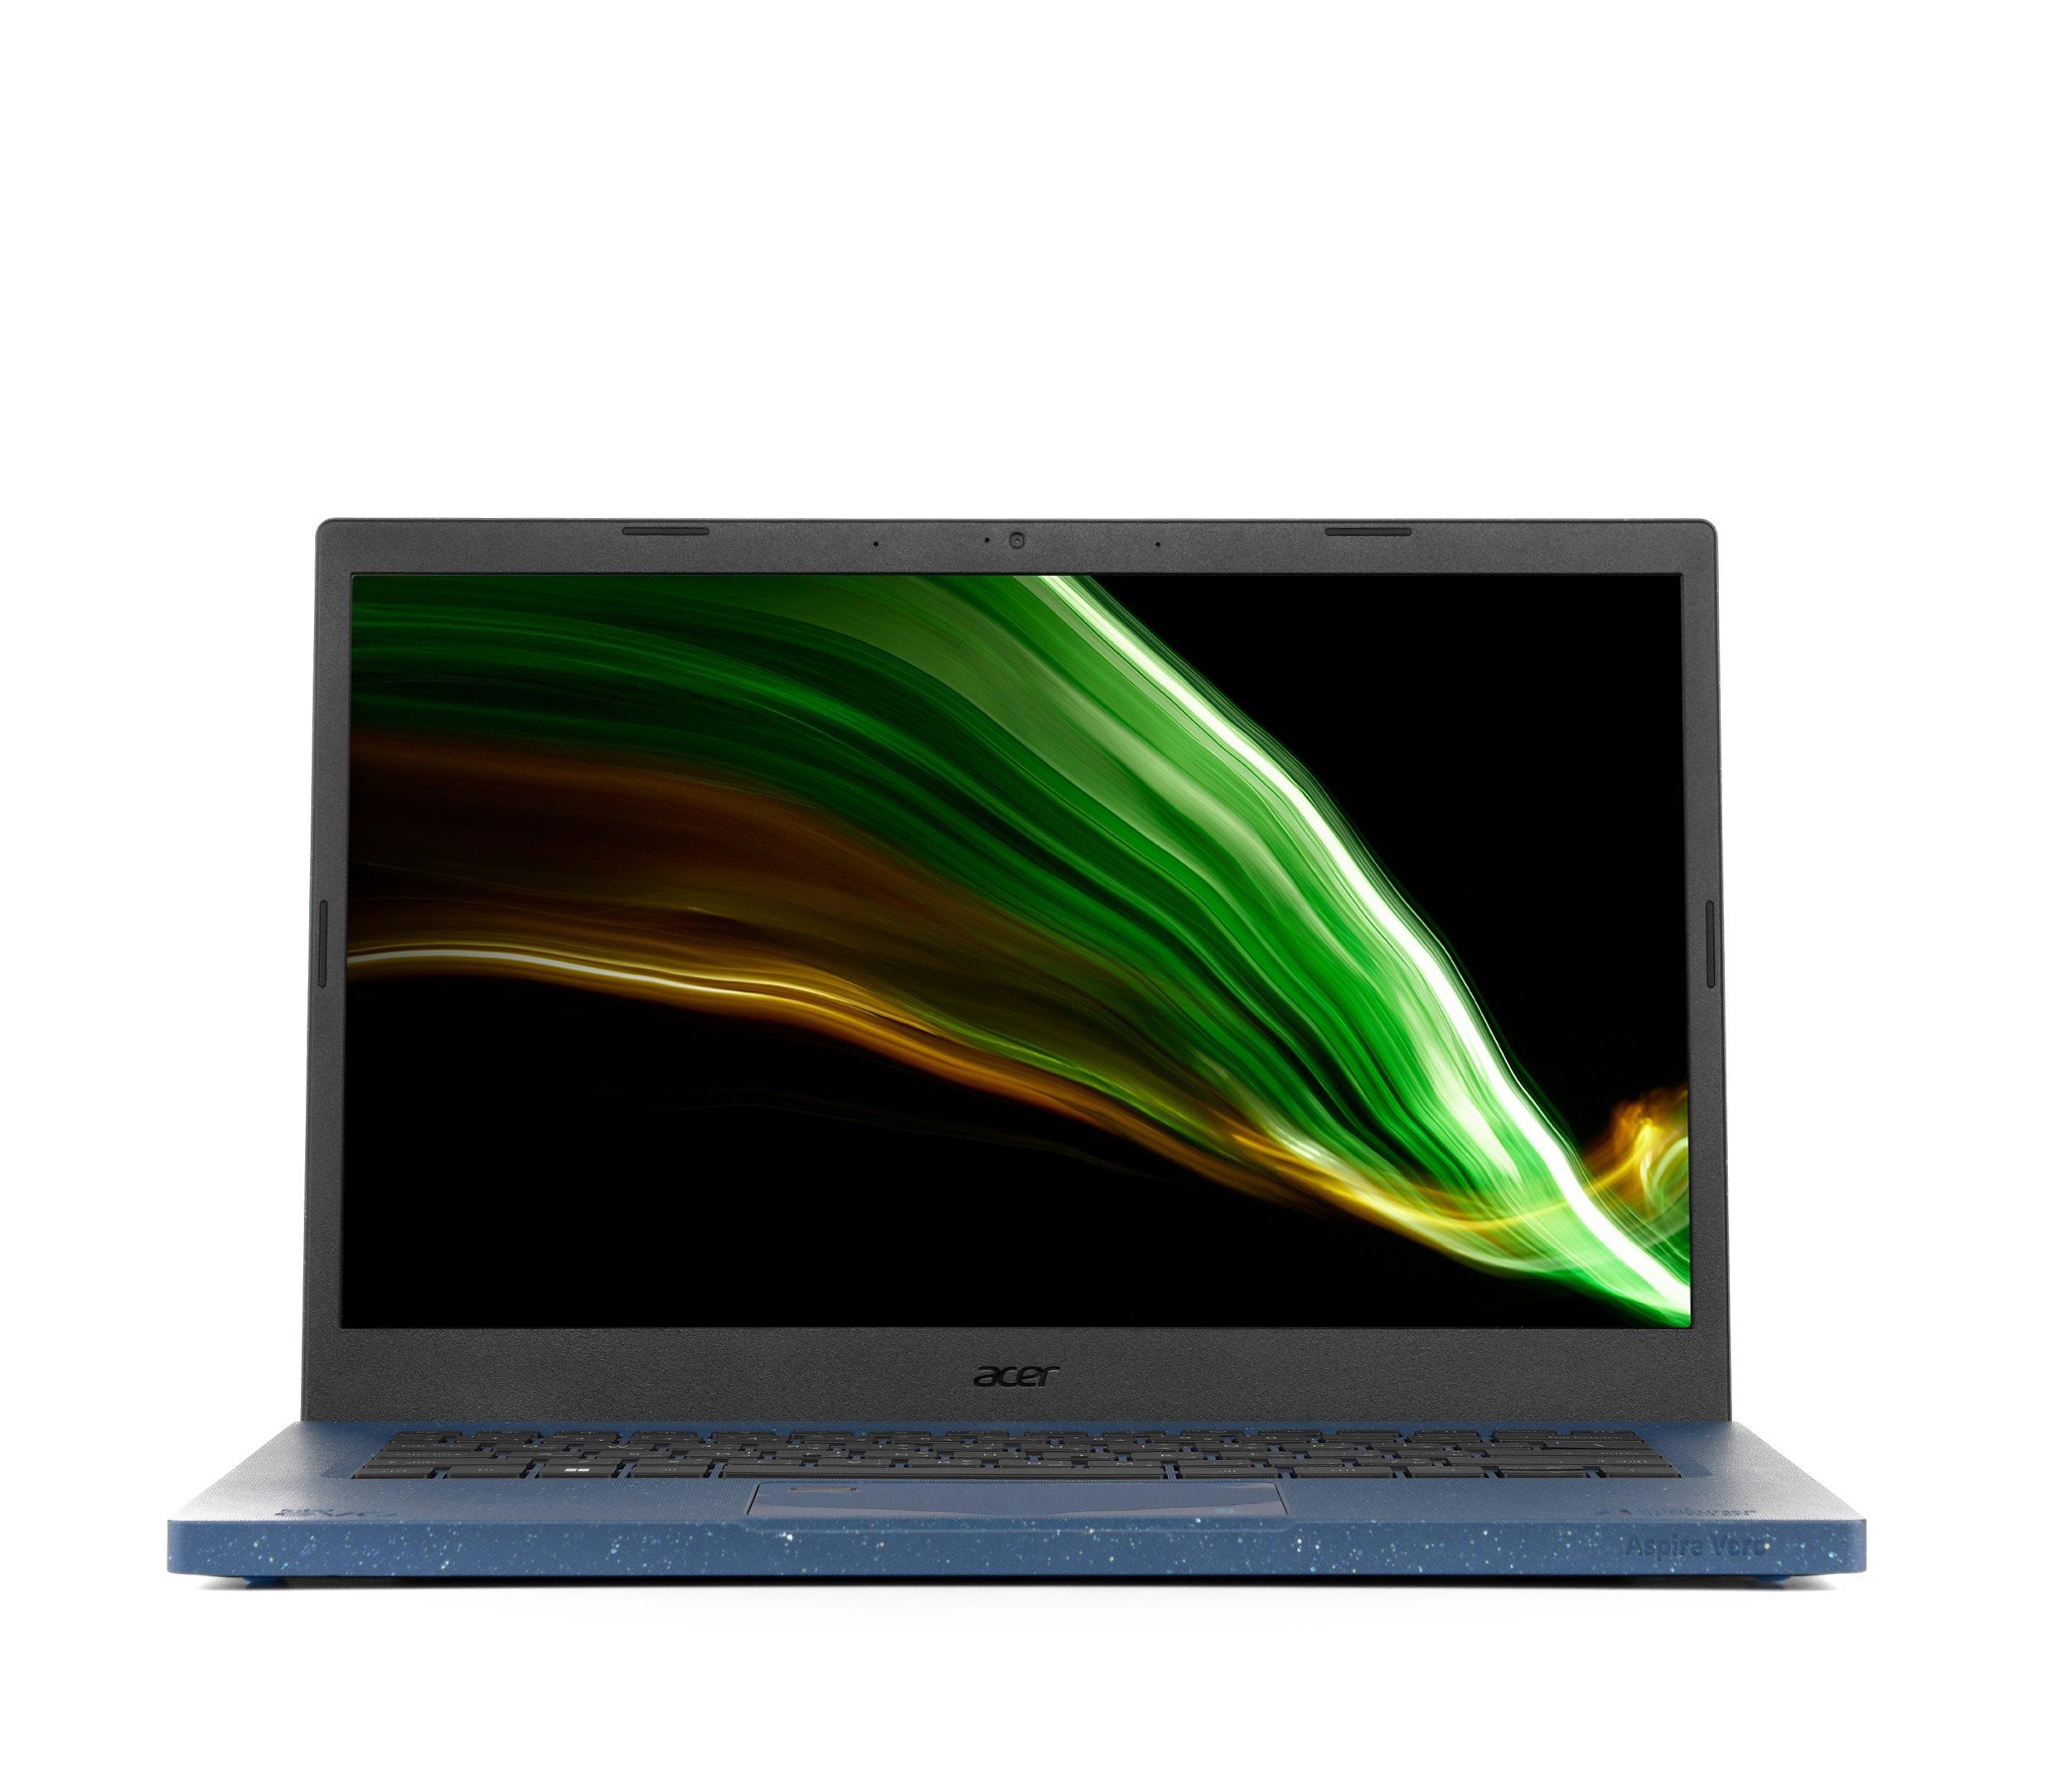 I3 1115g4 3.00 ghz. Acer a715-42g. Ноутбук игровой Acer Aspire 7 a715-42g-r44j (NH.qdler.004). Acer Swift 3 sf314. Acer Aspire 1 a114-33-p7vd.